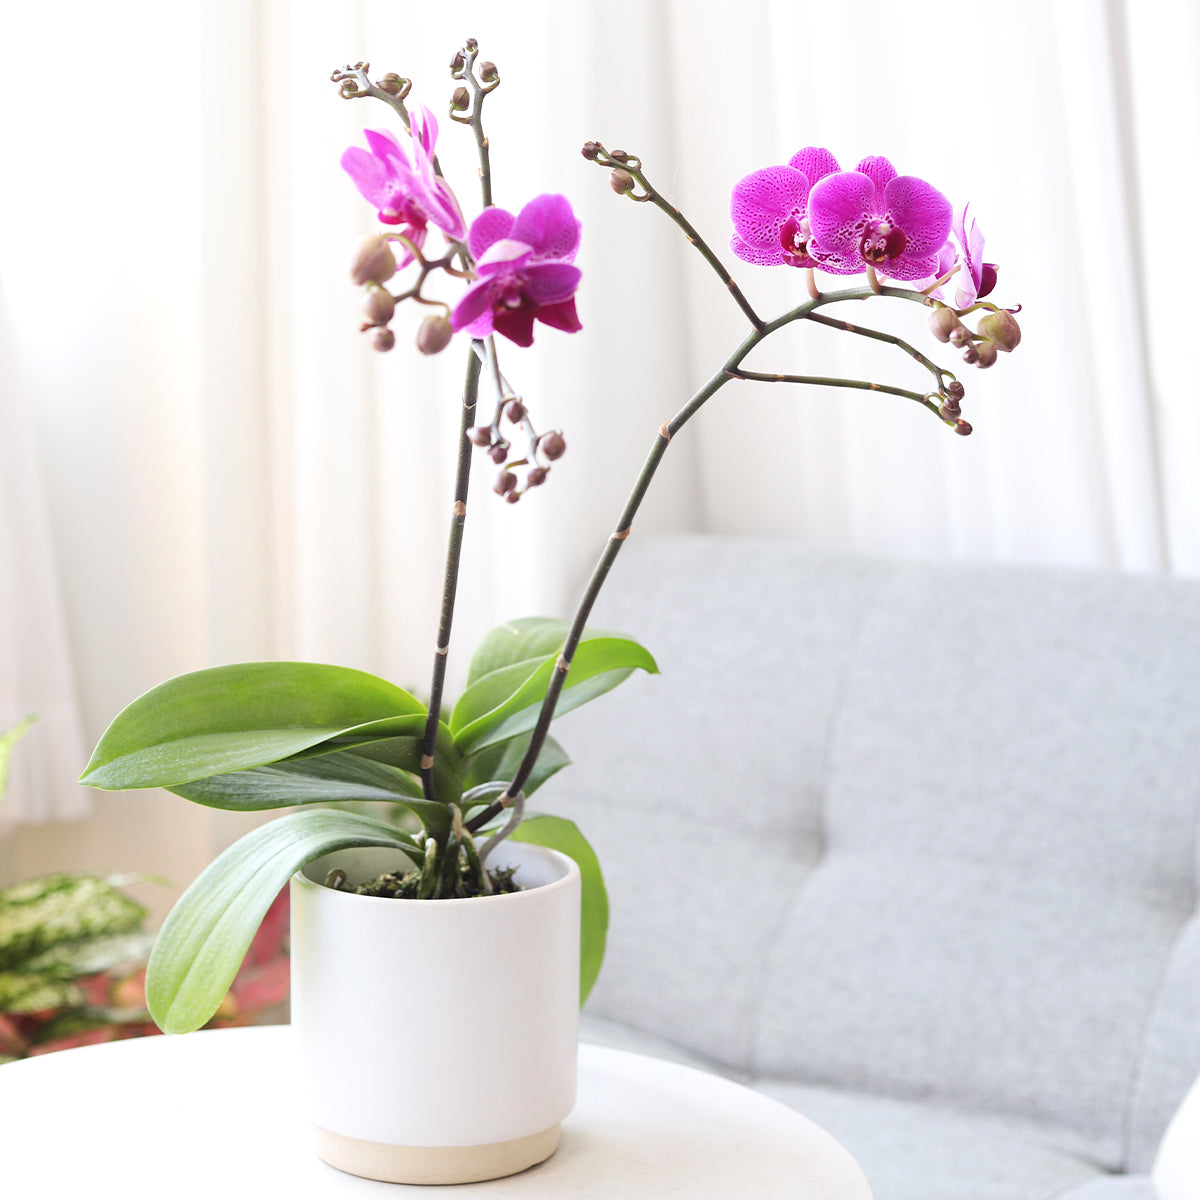 Purple Phalaenopsis Orchid, Phalaenopsis orchids, tropical houseplants, flowering plants, houseplants for sale